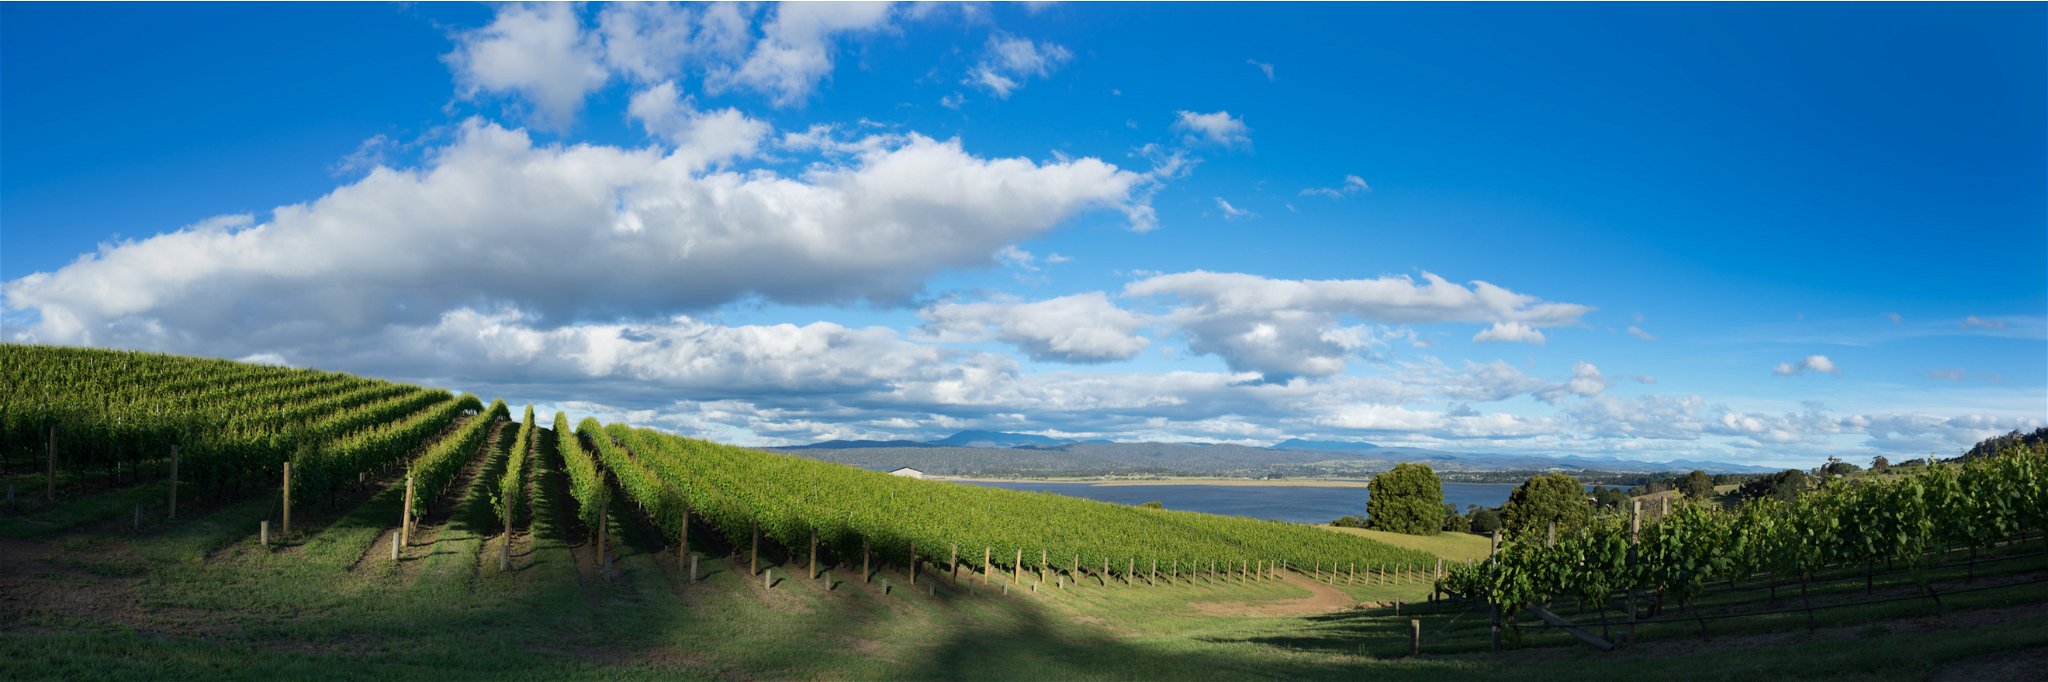 A vineyard in Tasmania, Australia.